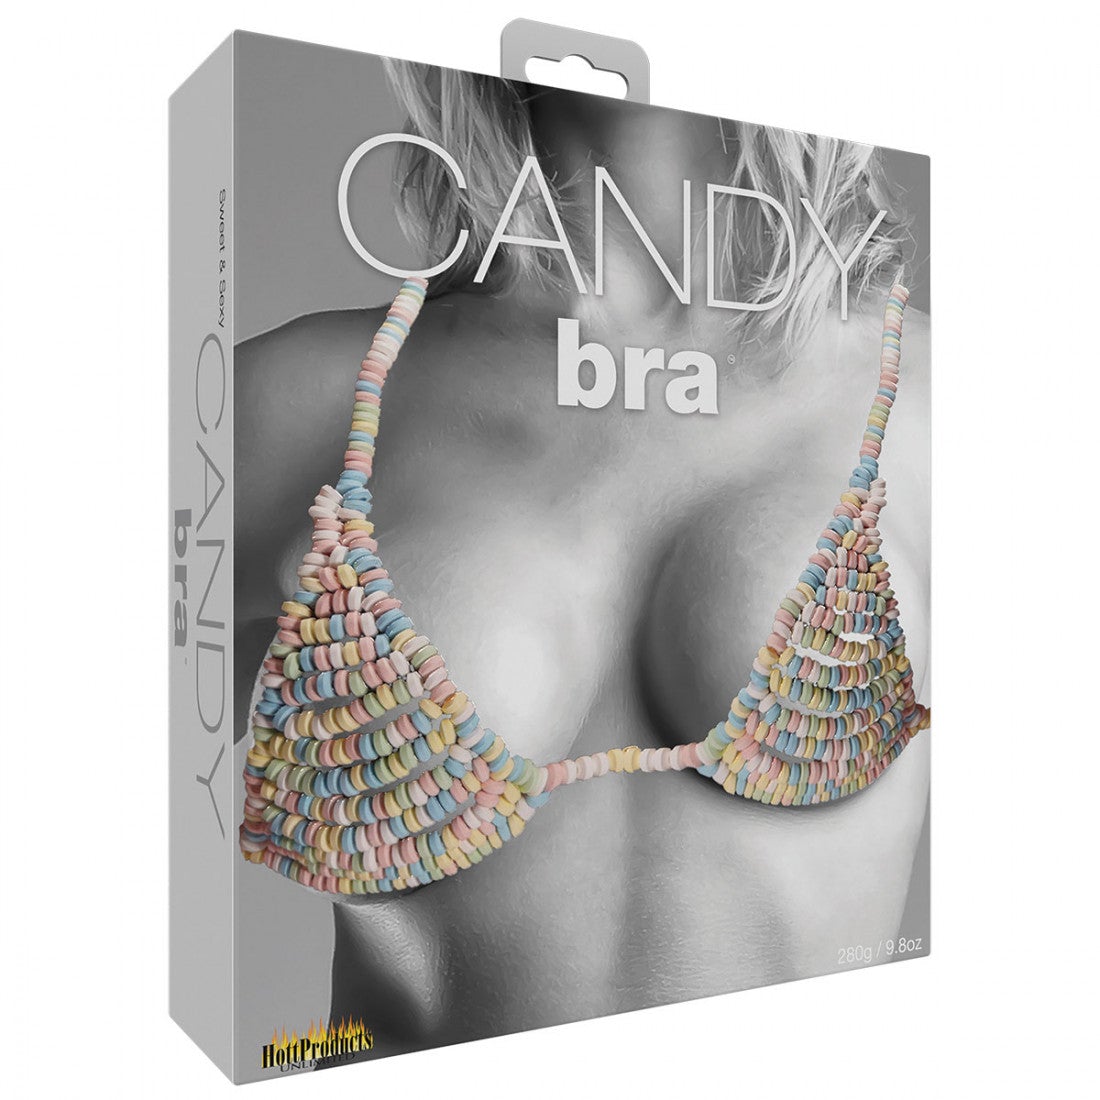 The Candy Candy Bra – Nuez Moscada